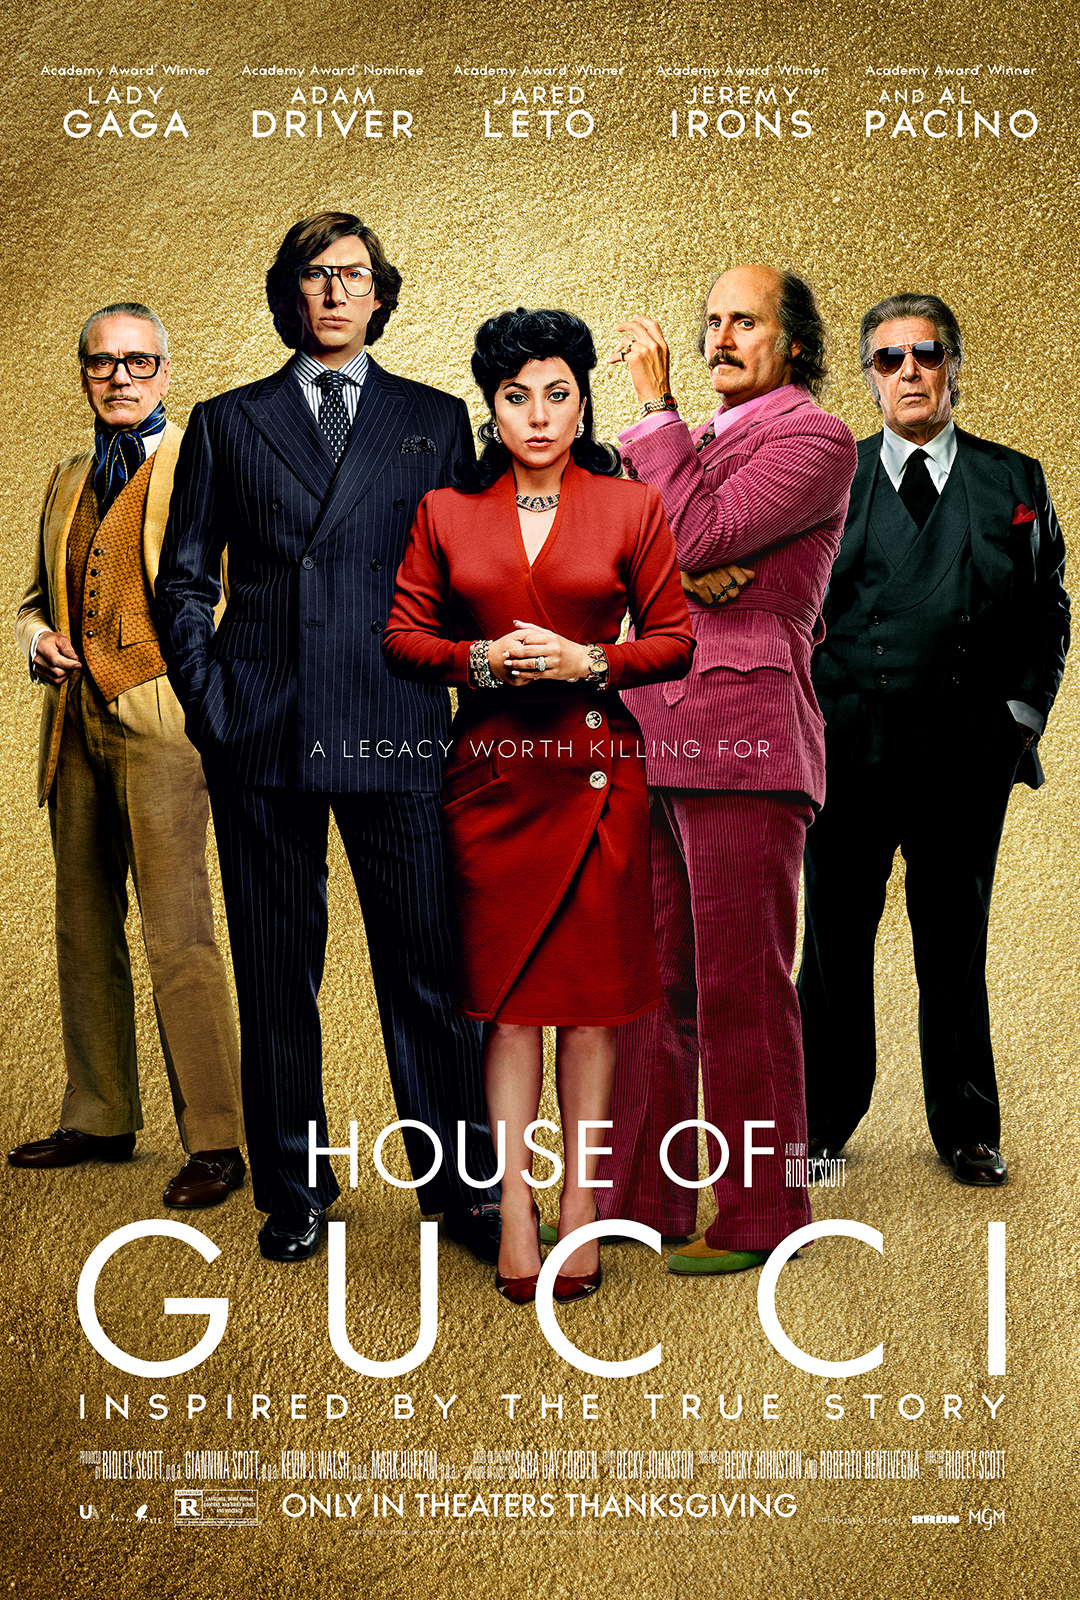 Stiahni si Filmy CZ/SK dabing Klan Gucci / House of Gucci (2021)(CZ) = CSFD 72%